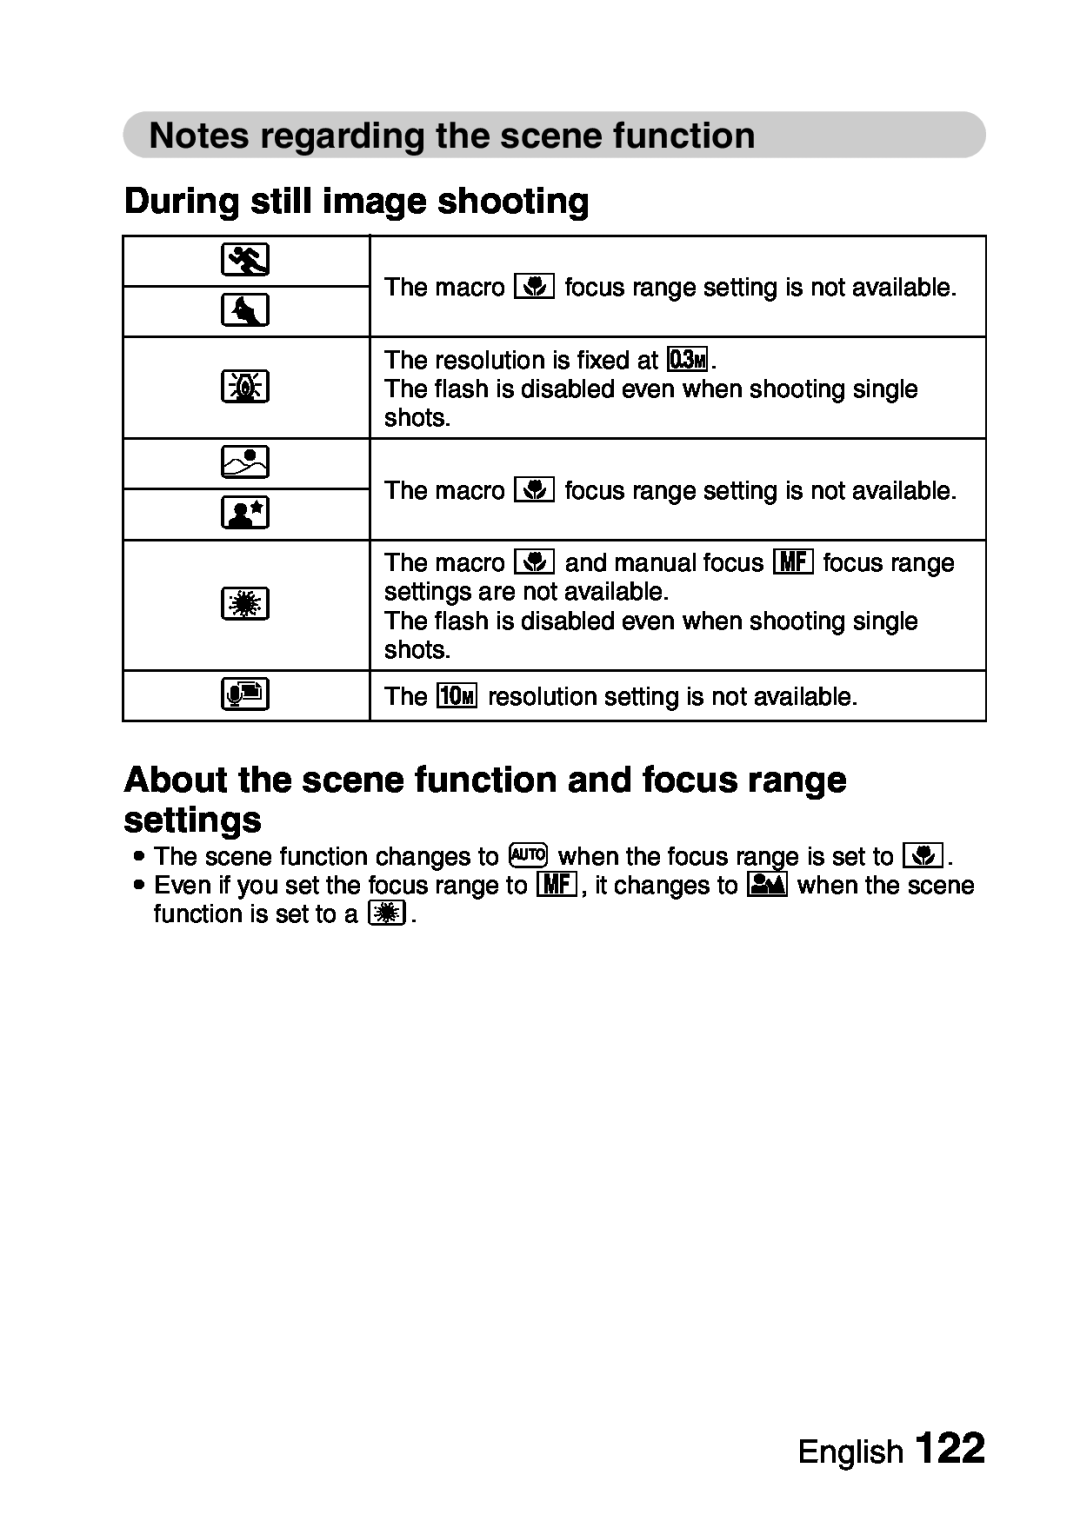 Sanyo VPC-S60 instruction manual Notes regarding the scene function During still image shooting, English 